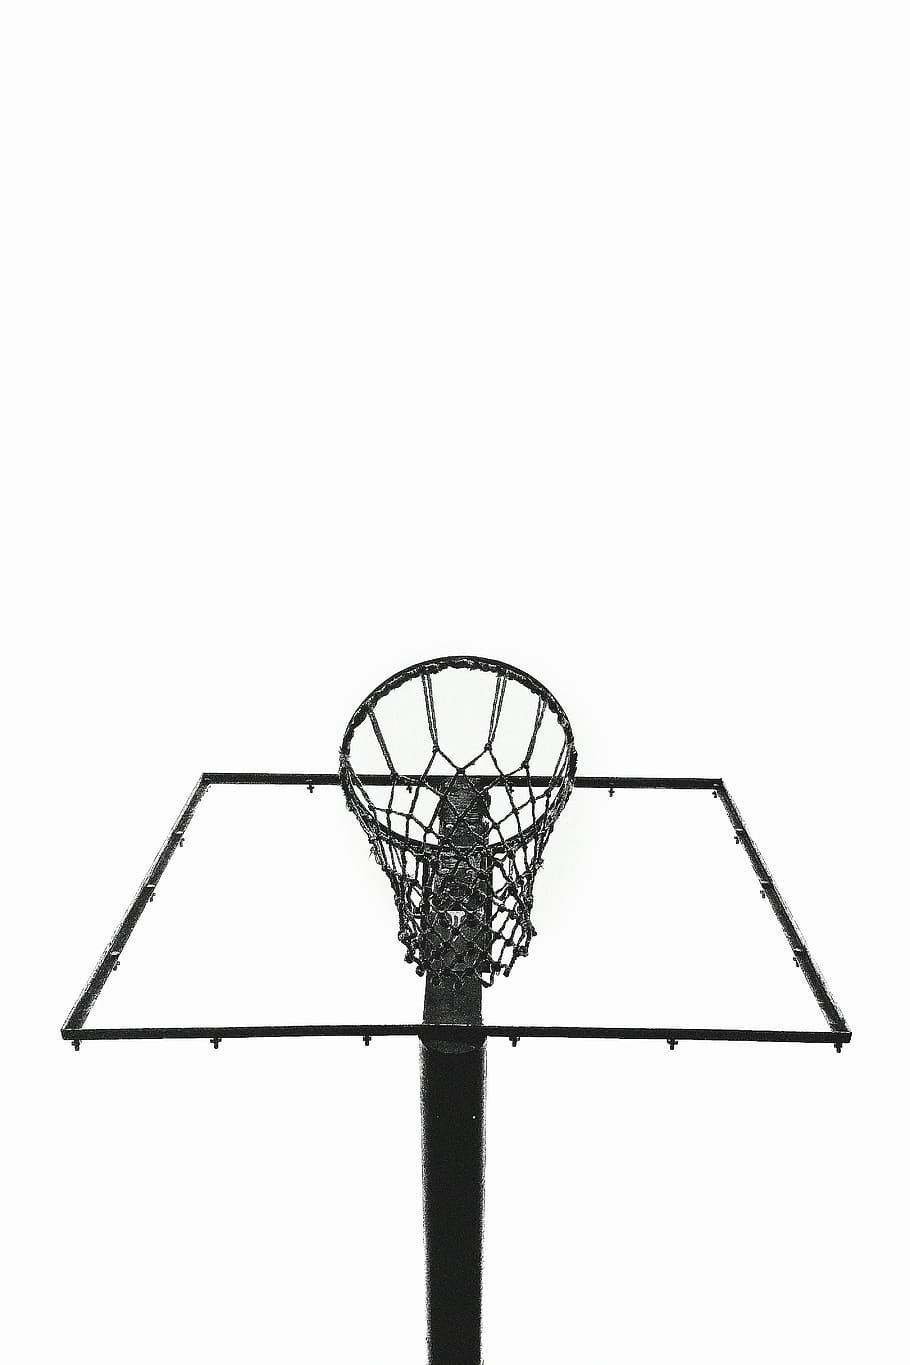 black basketball hoop, steel, framed, net, hoops, fitness, sports